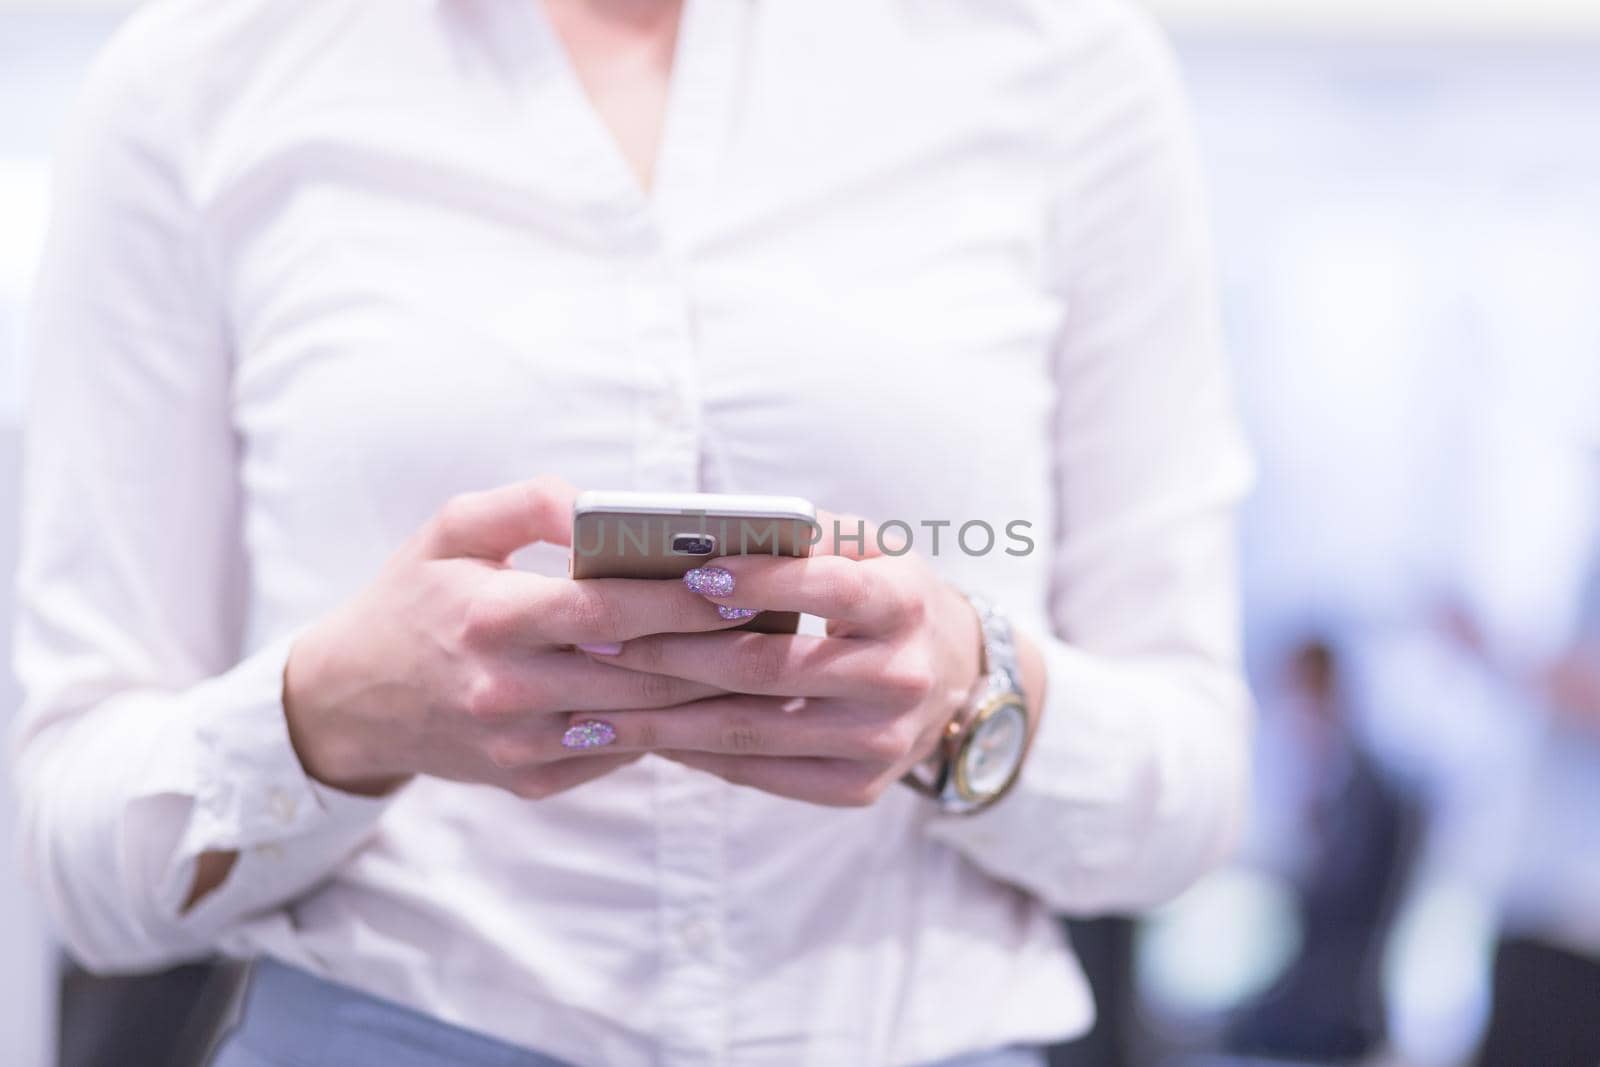 Elegant Woman Using Mobile Phone in startup office building by dotshock